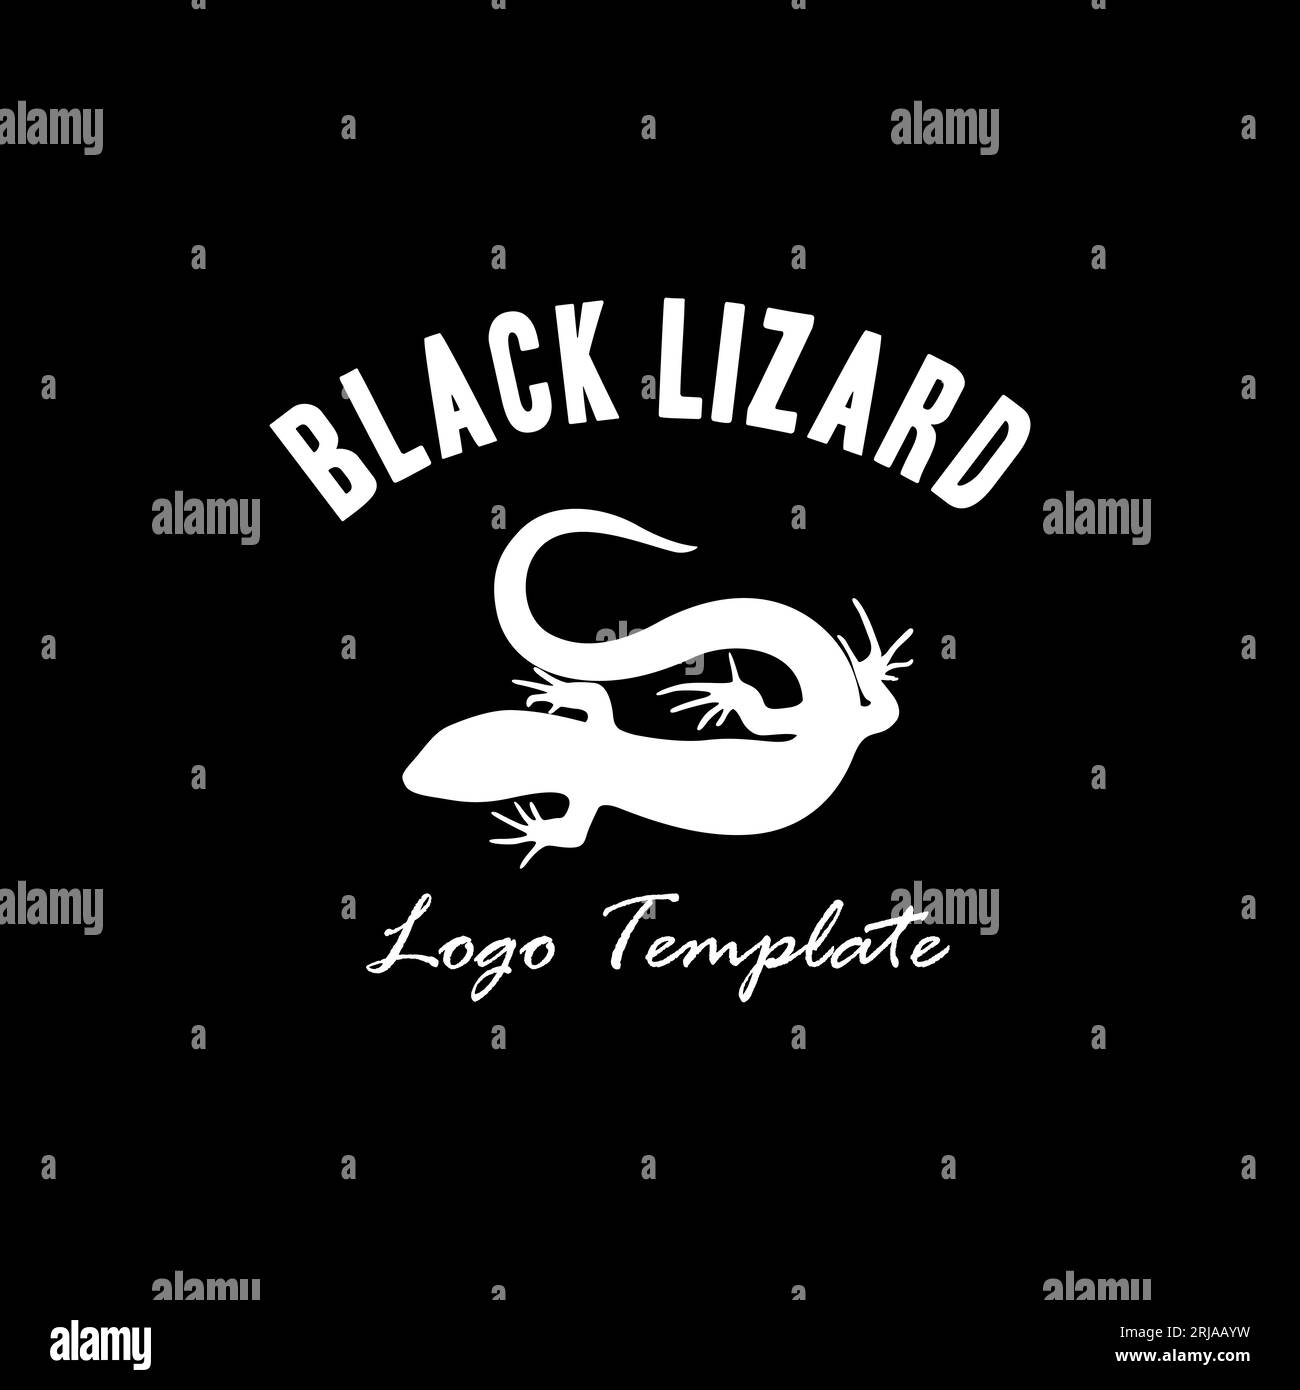 Lizard Gecko Silhouette logo Template Design inspiration Illustration de Vecteur